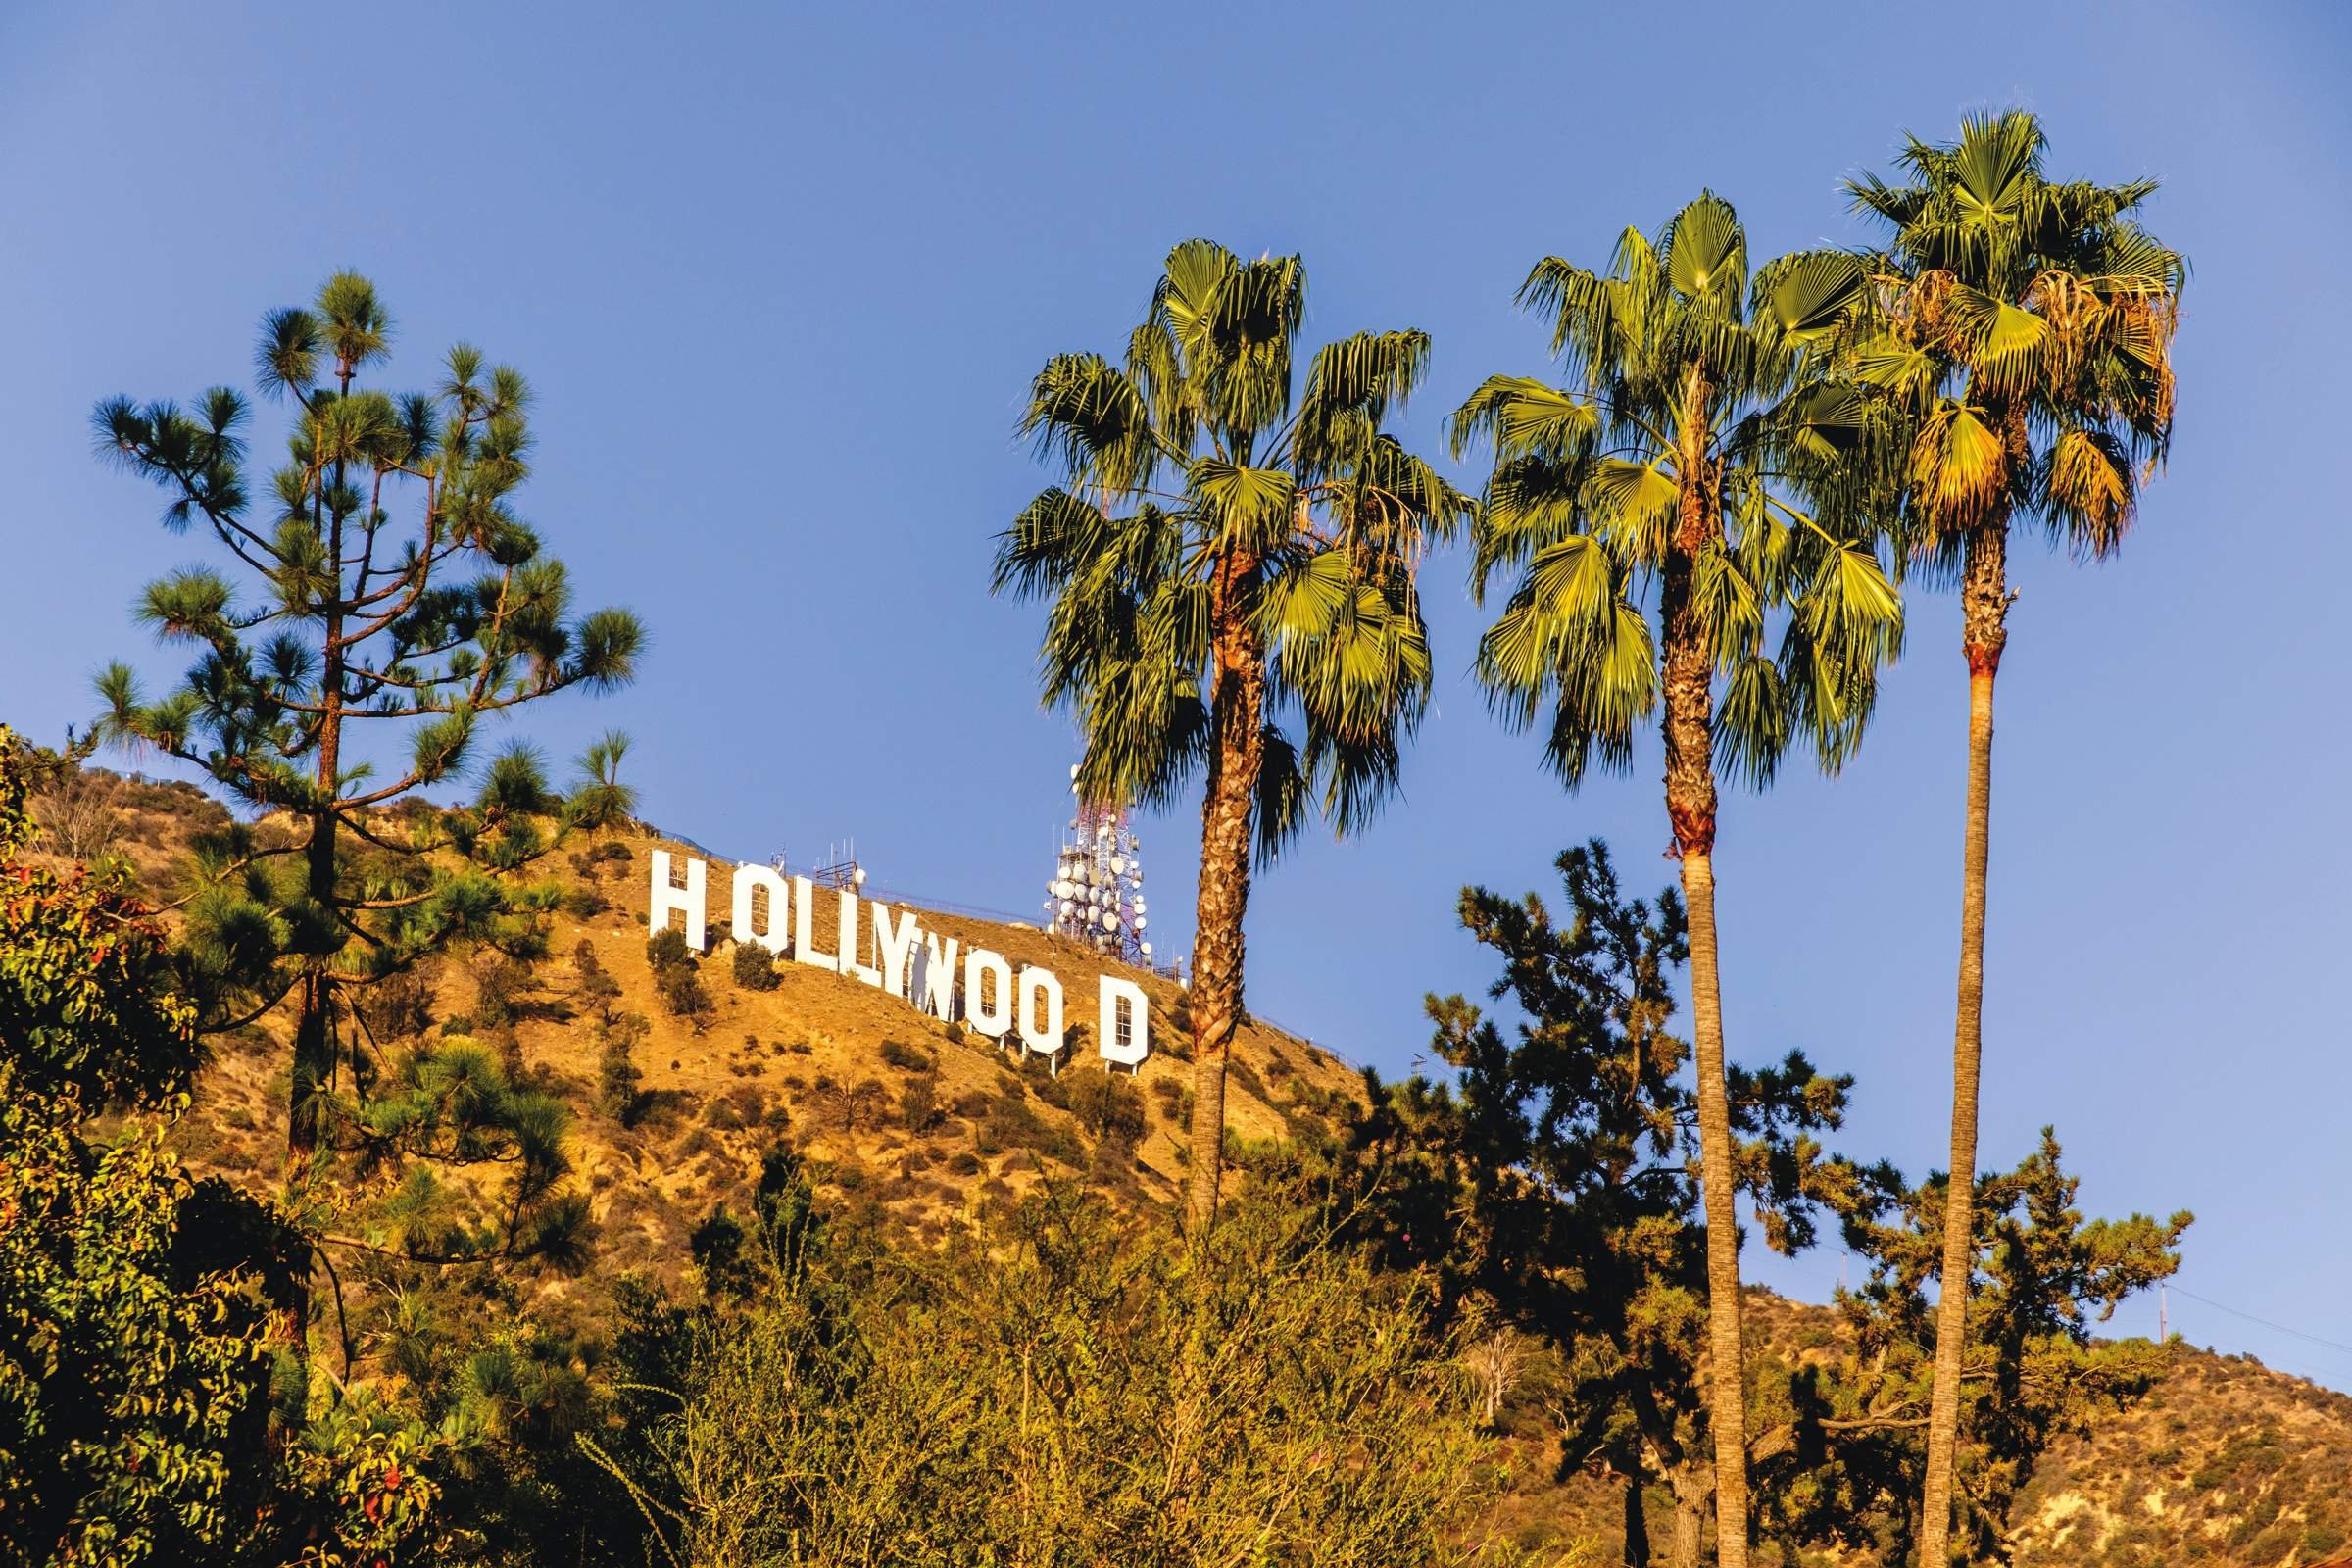 Голливуд это город. США Калифорния Лос-Анджелес Голливуд. Лос Анджелес штат Калифорния. Лос Анджелес Лос Анджелес Голливуд. Знак Голливуда Лос-Анджелес.